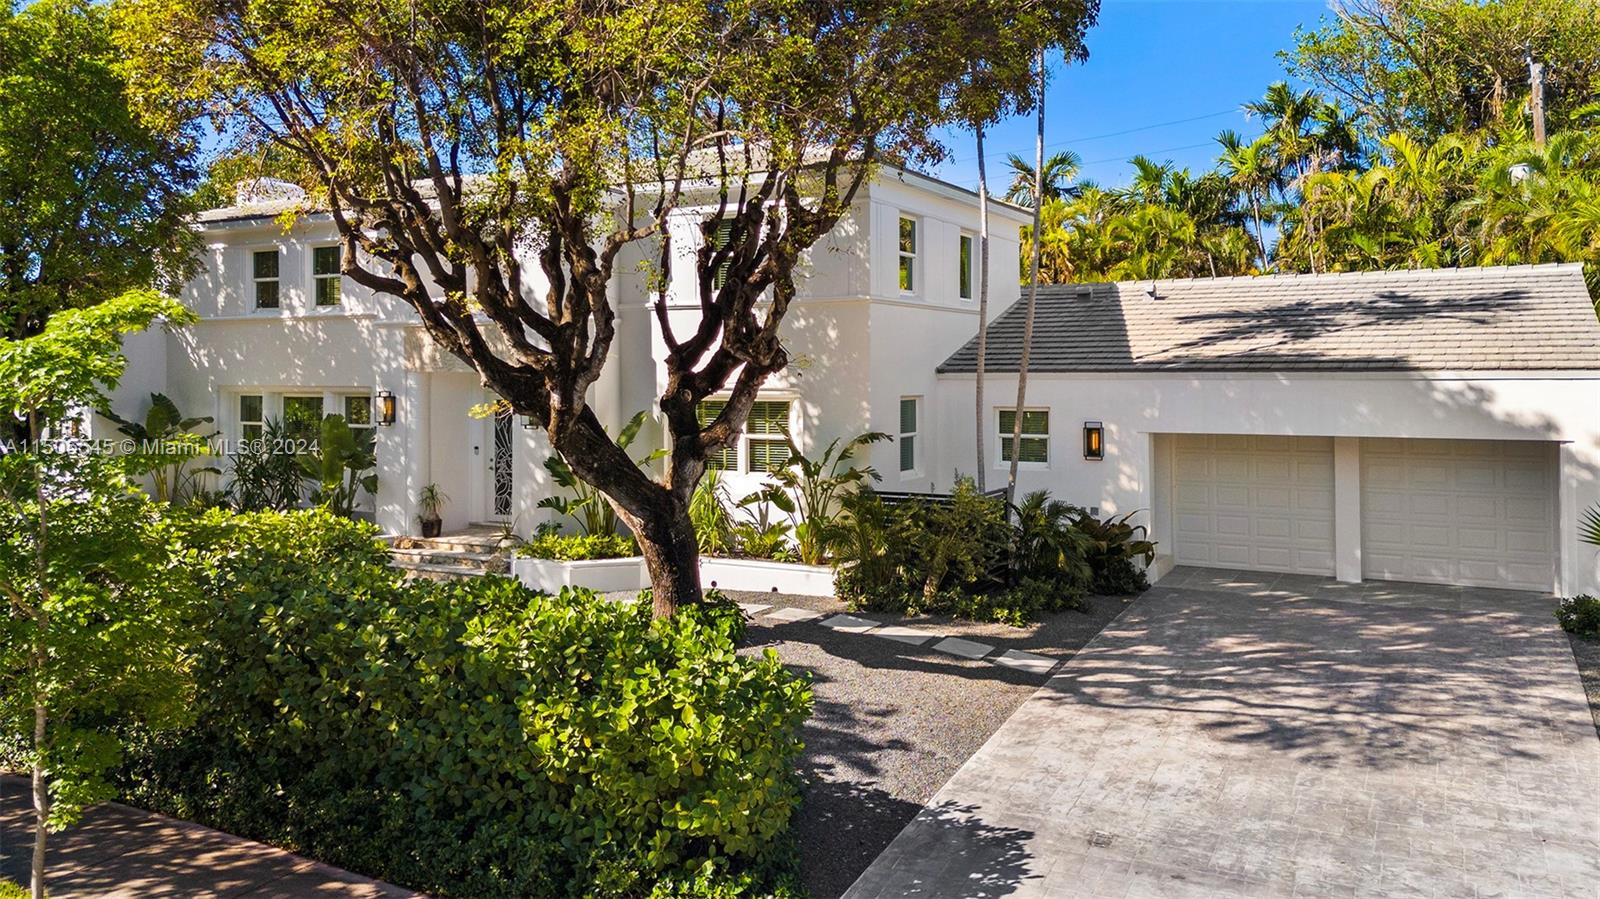 Property for Sale at 2922 Flamingo Dr, Miami Beach, Miami-Dade County, Florida - Bedrooms: 5 
Bathrooms: 6  - $7,250,000